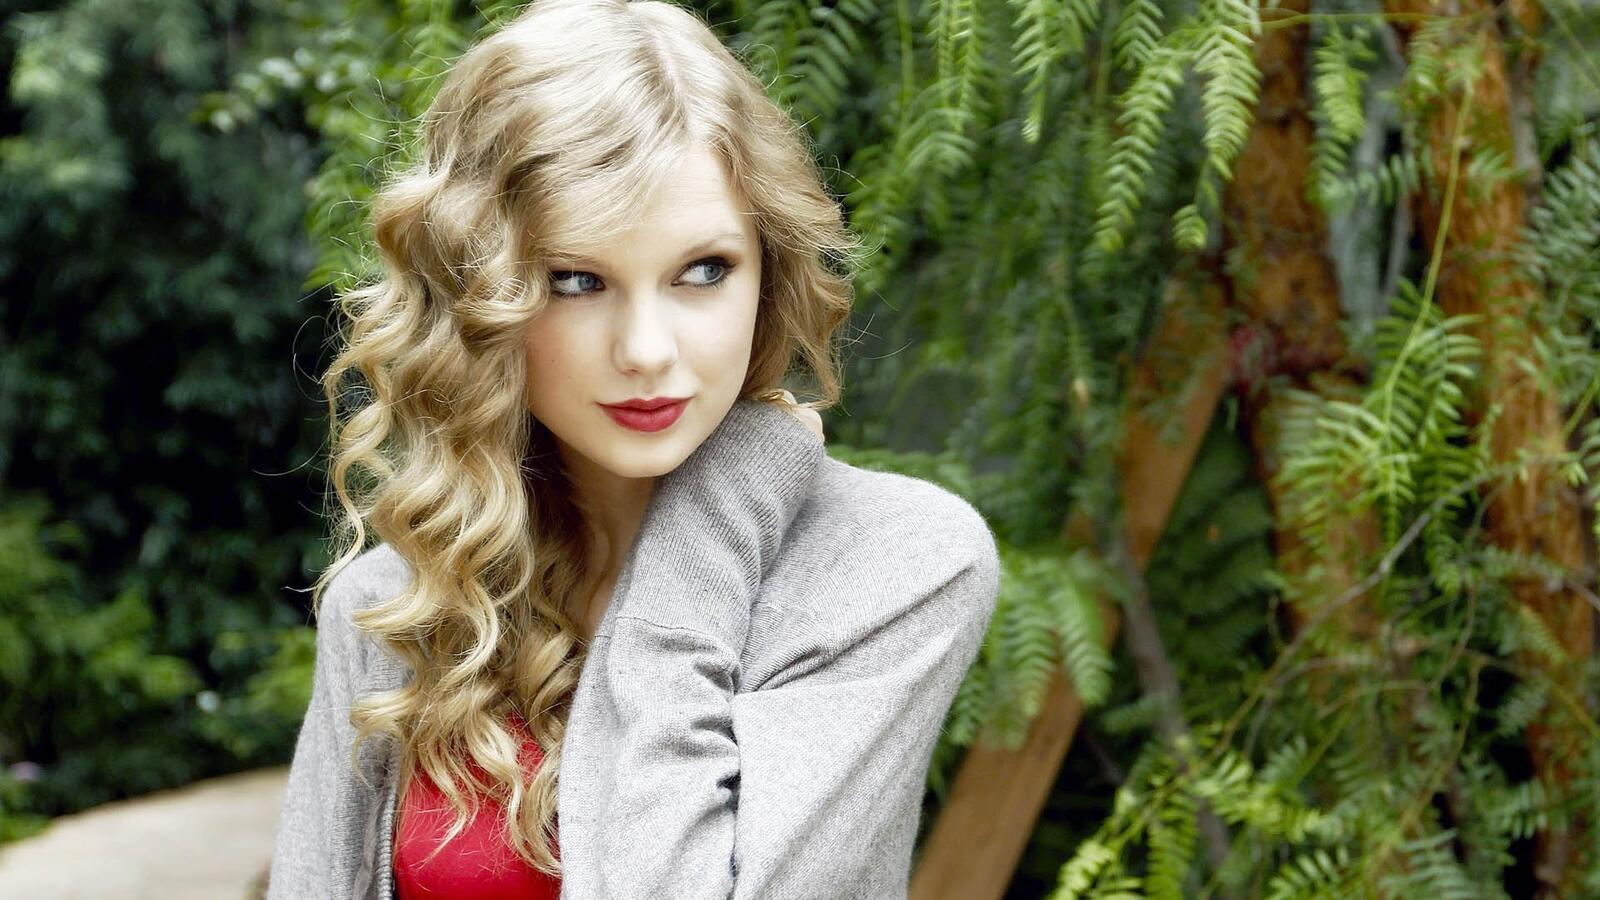 Wallpapers Taylor Swift blonde hair celebrity on the desktop